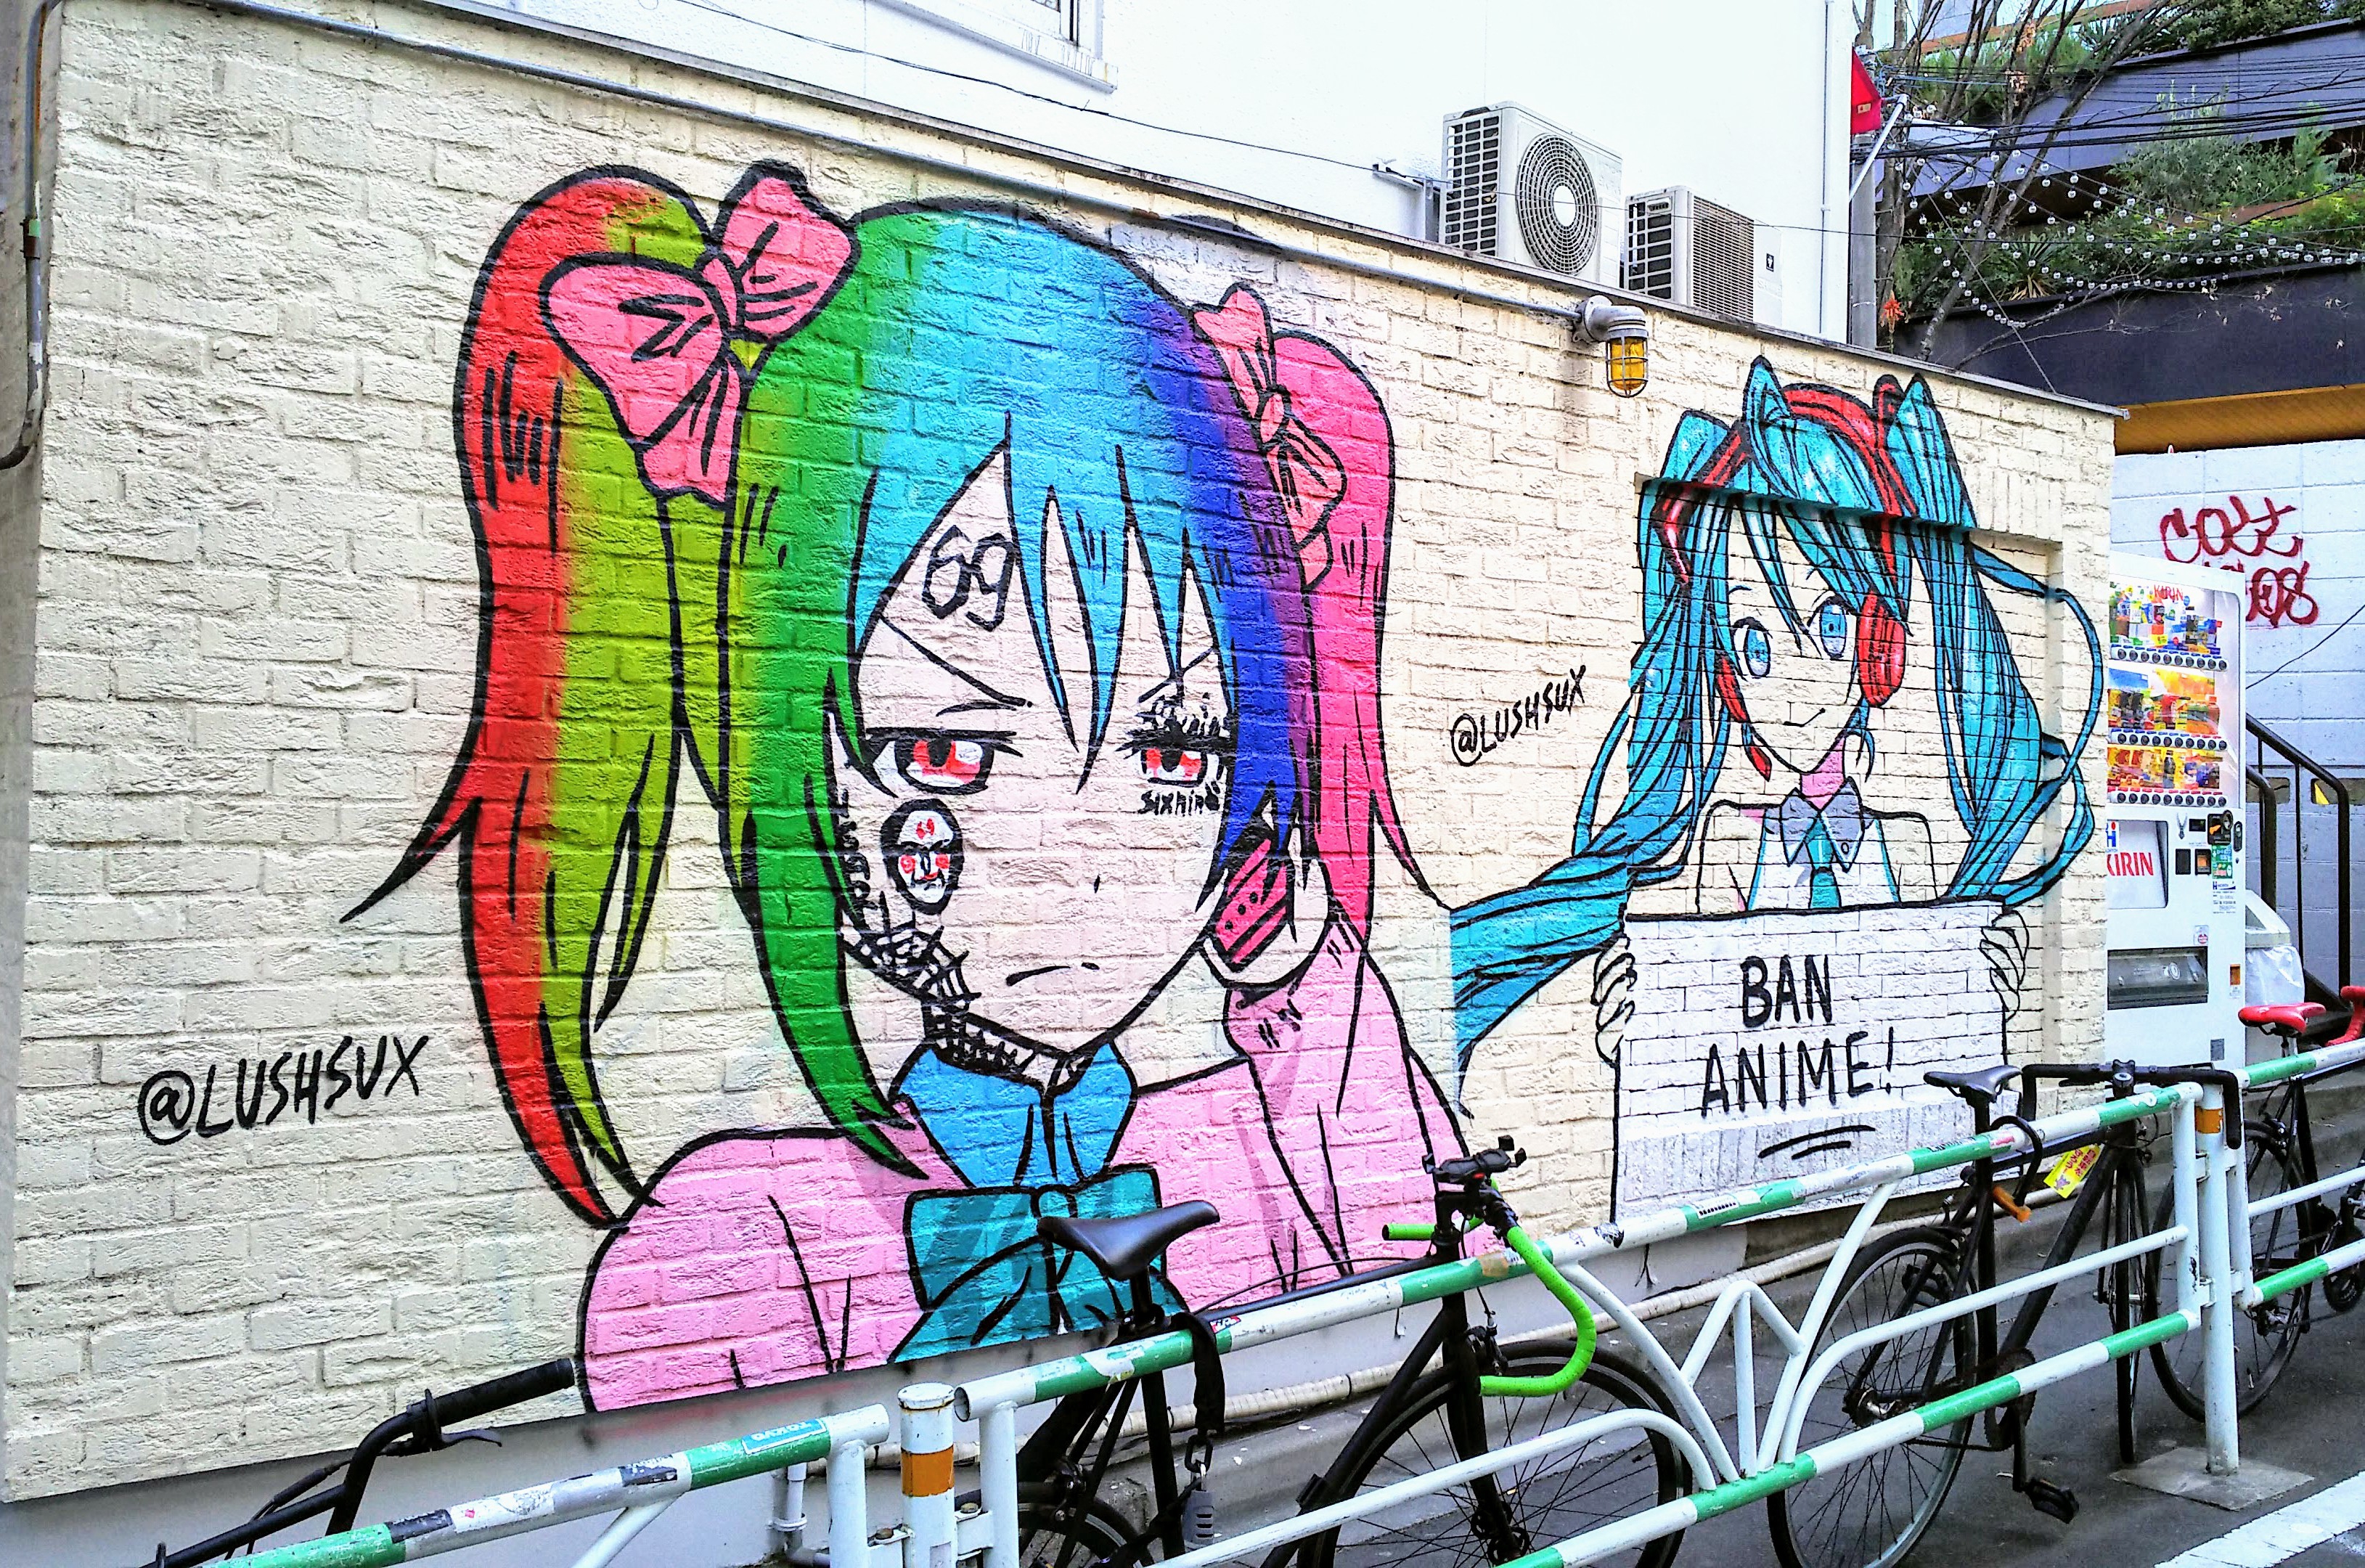 Ban Anime! mural: Shibuya | tokyo:as it is